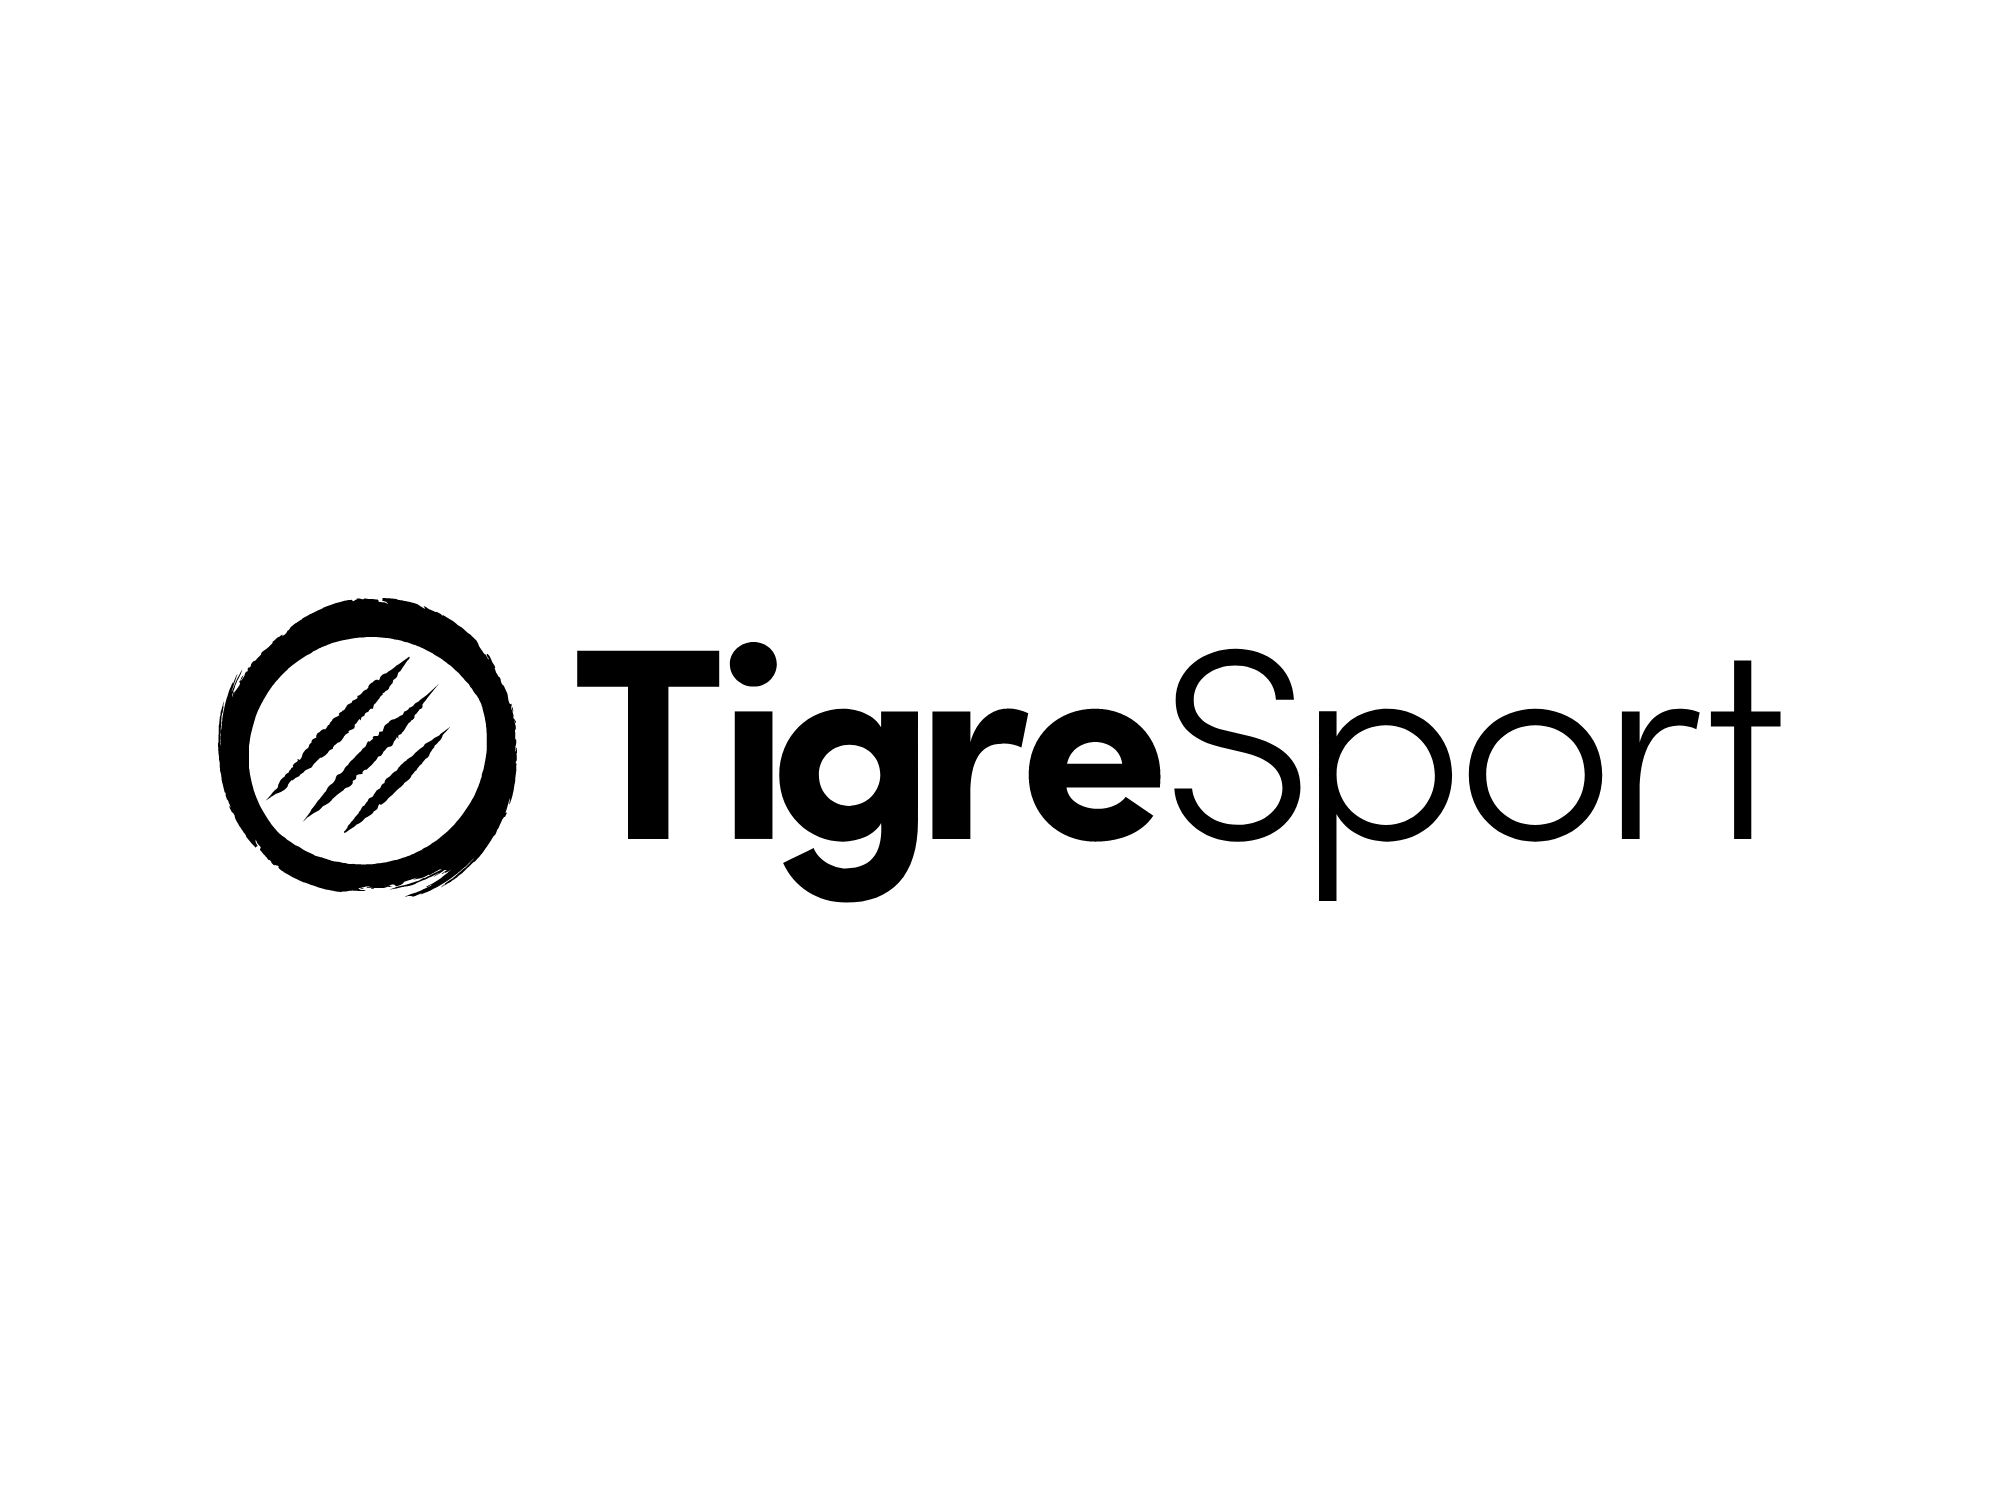 TigreSport